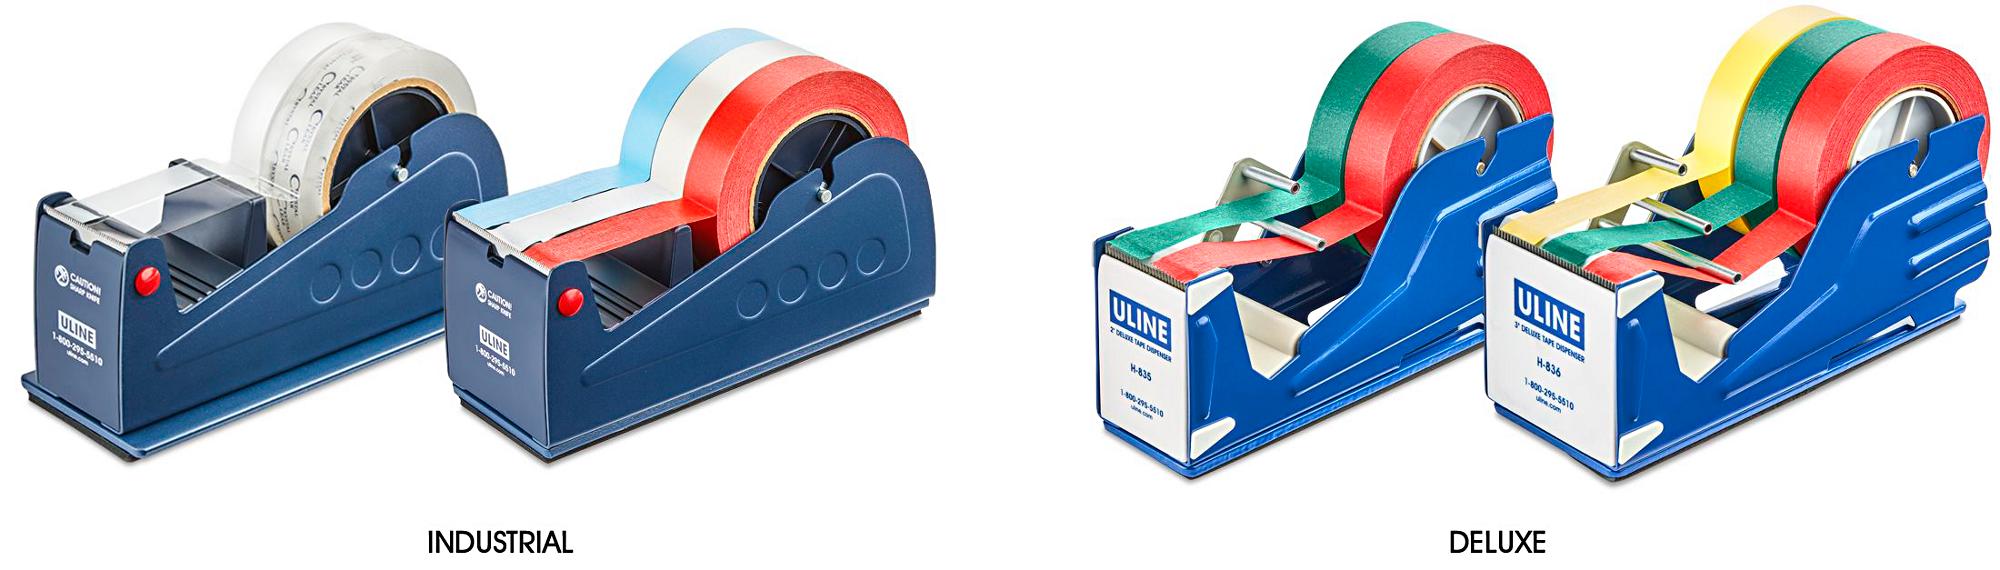 Multi-Roll Tape Dispensers